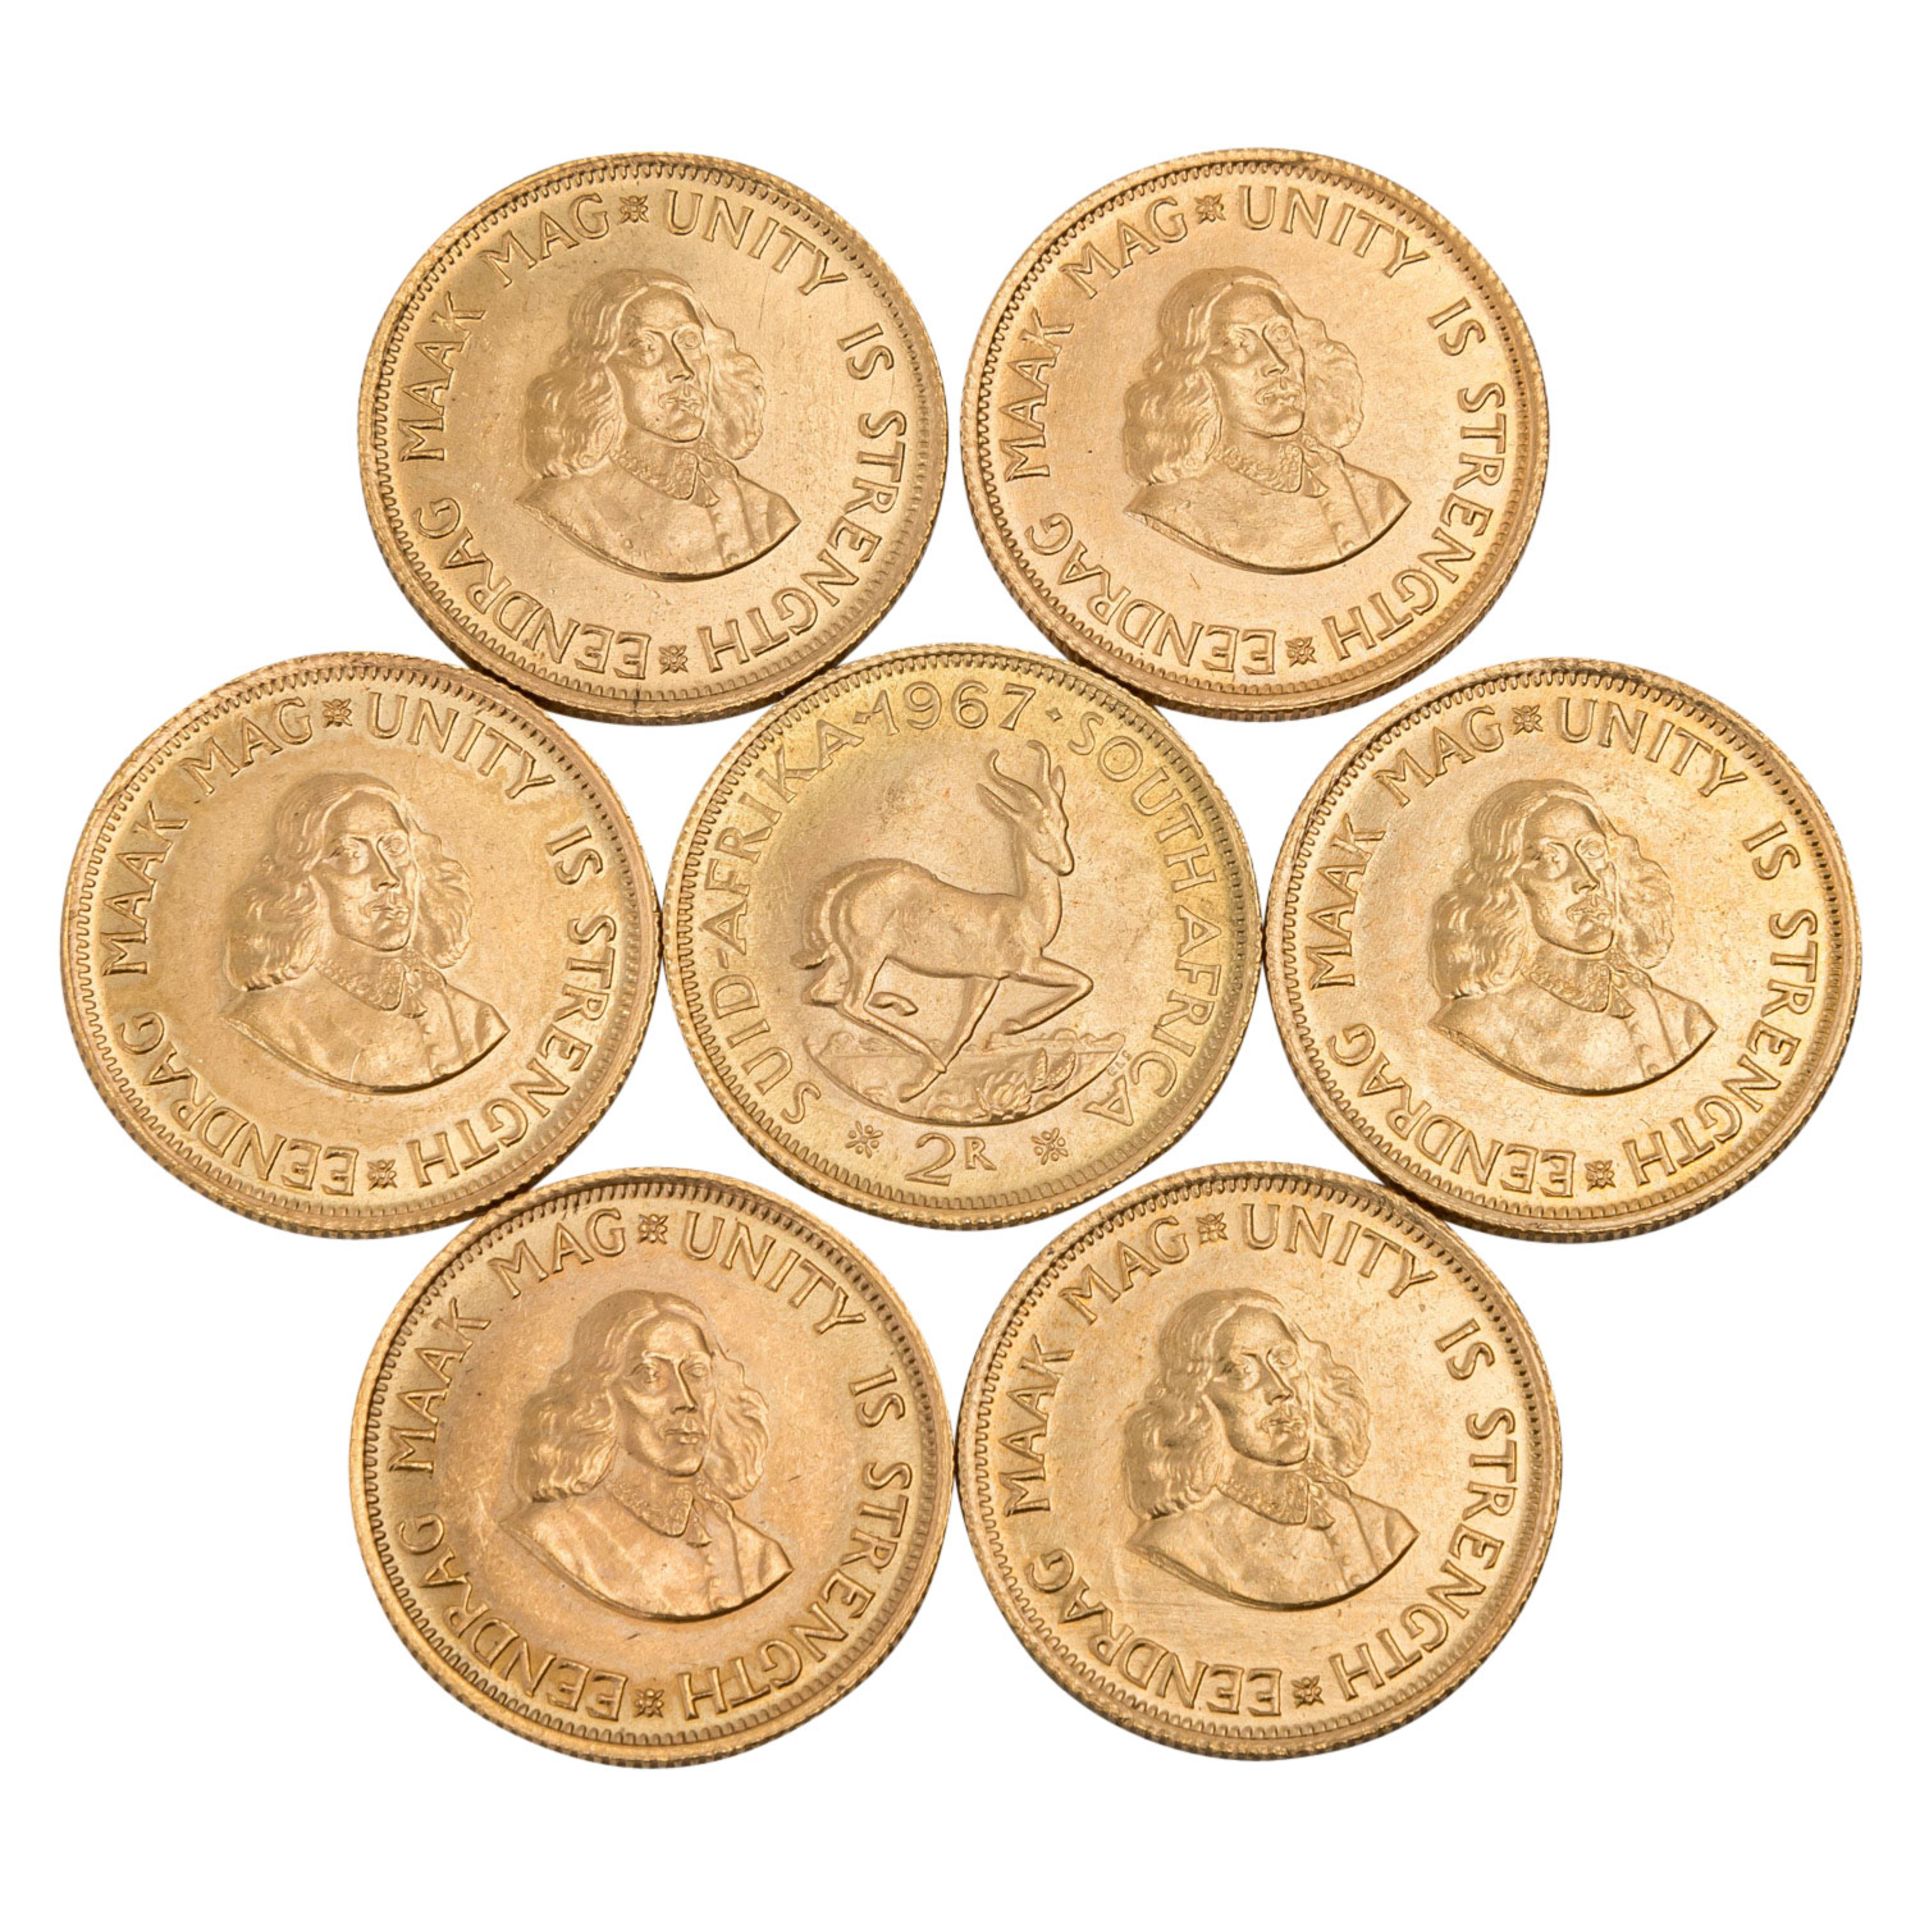 Südafrika / GOLD - 25 x 2 Rand, verschiedene Jahrgänge, Motiv Springbock, - Image 2 of 2